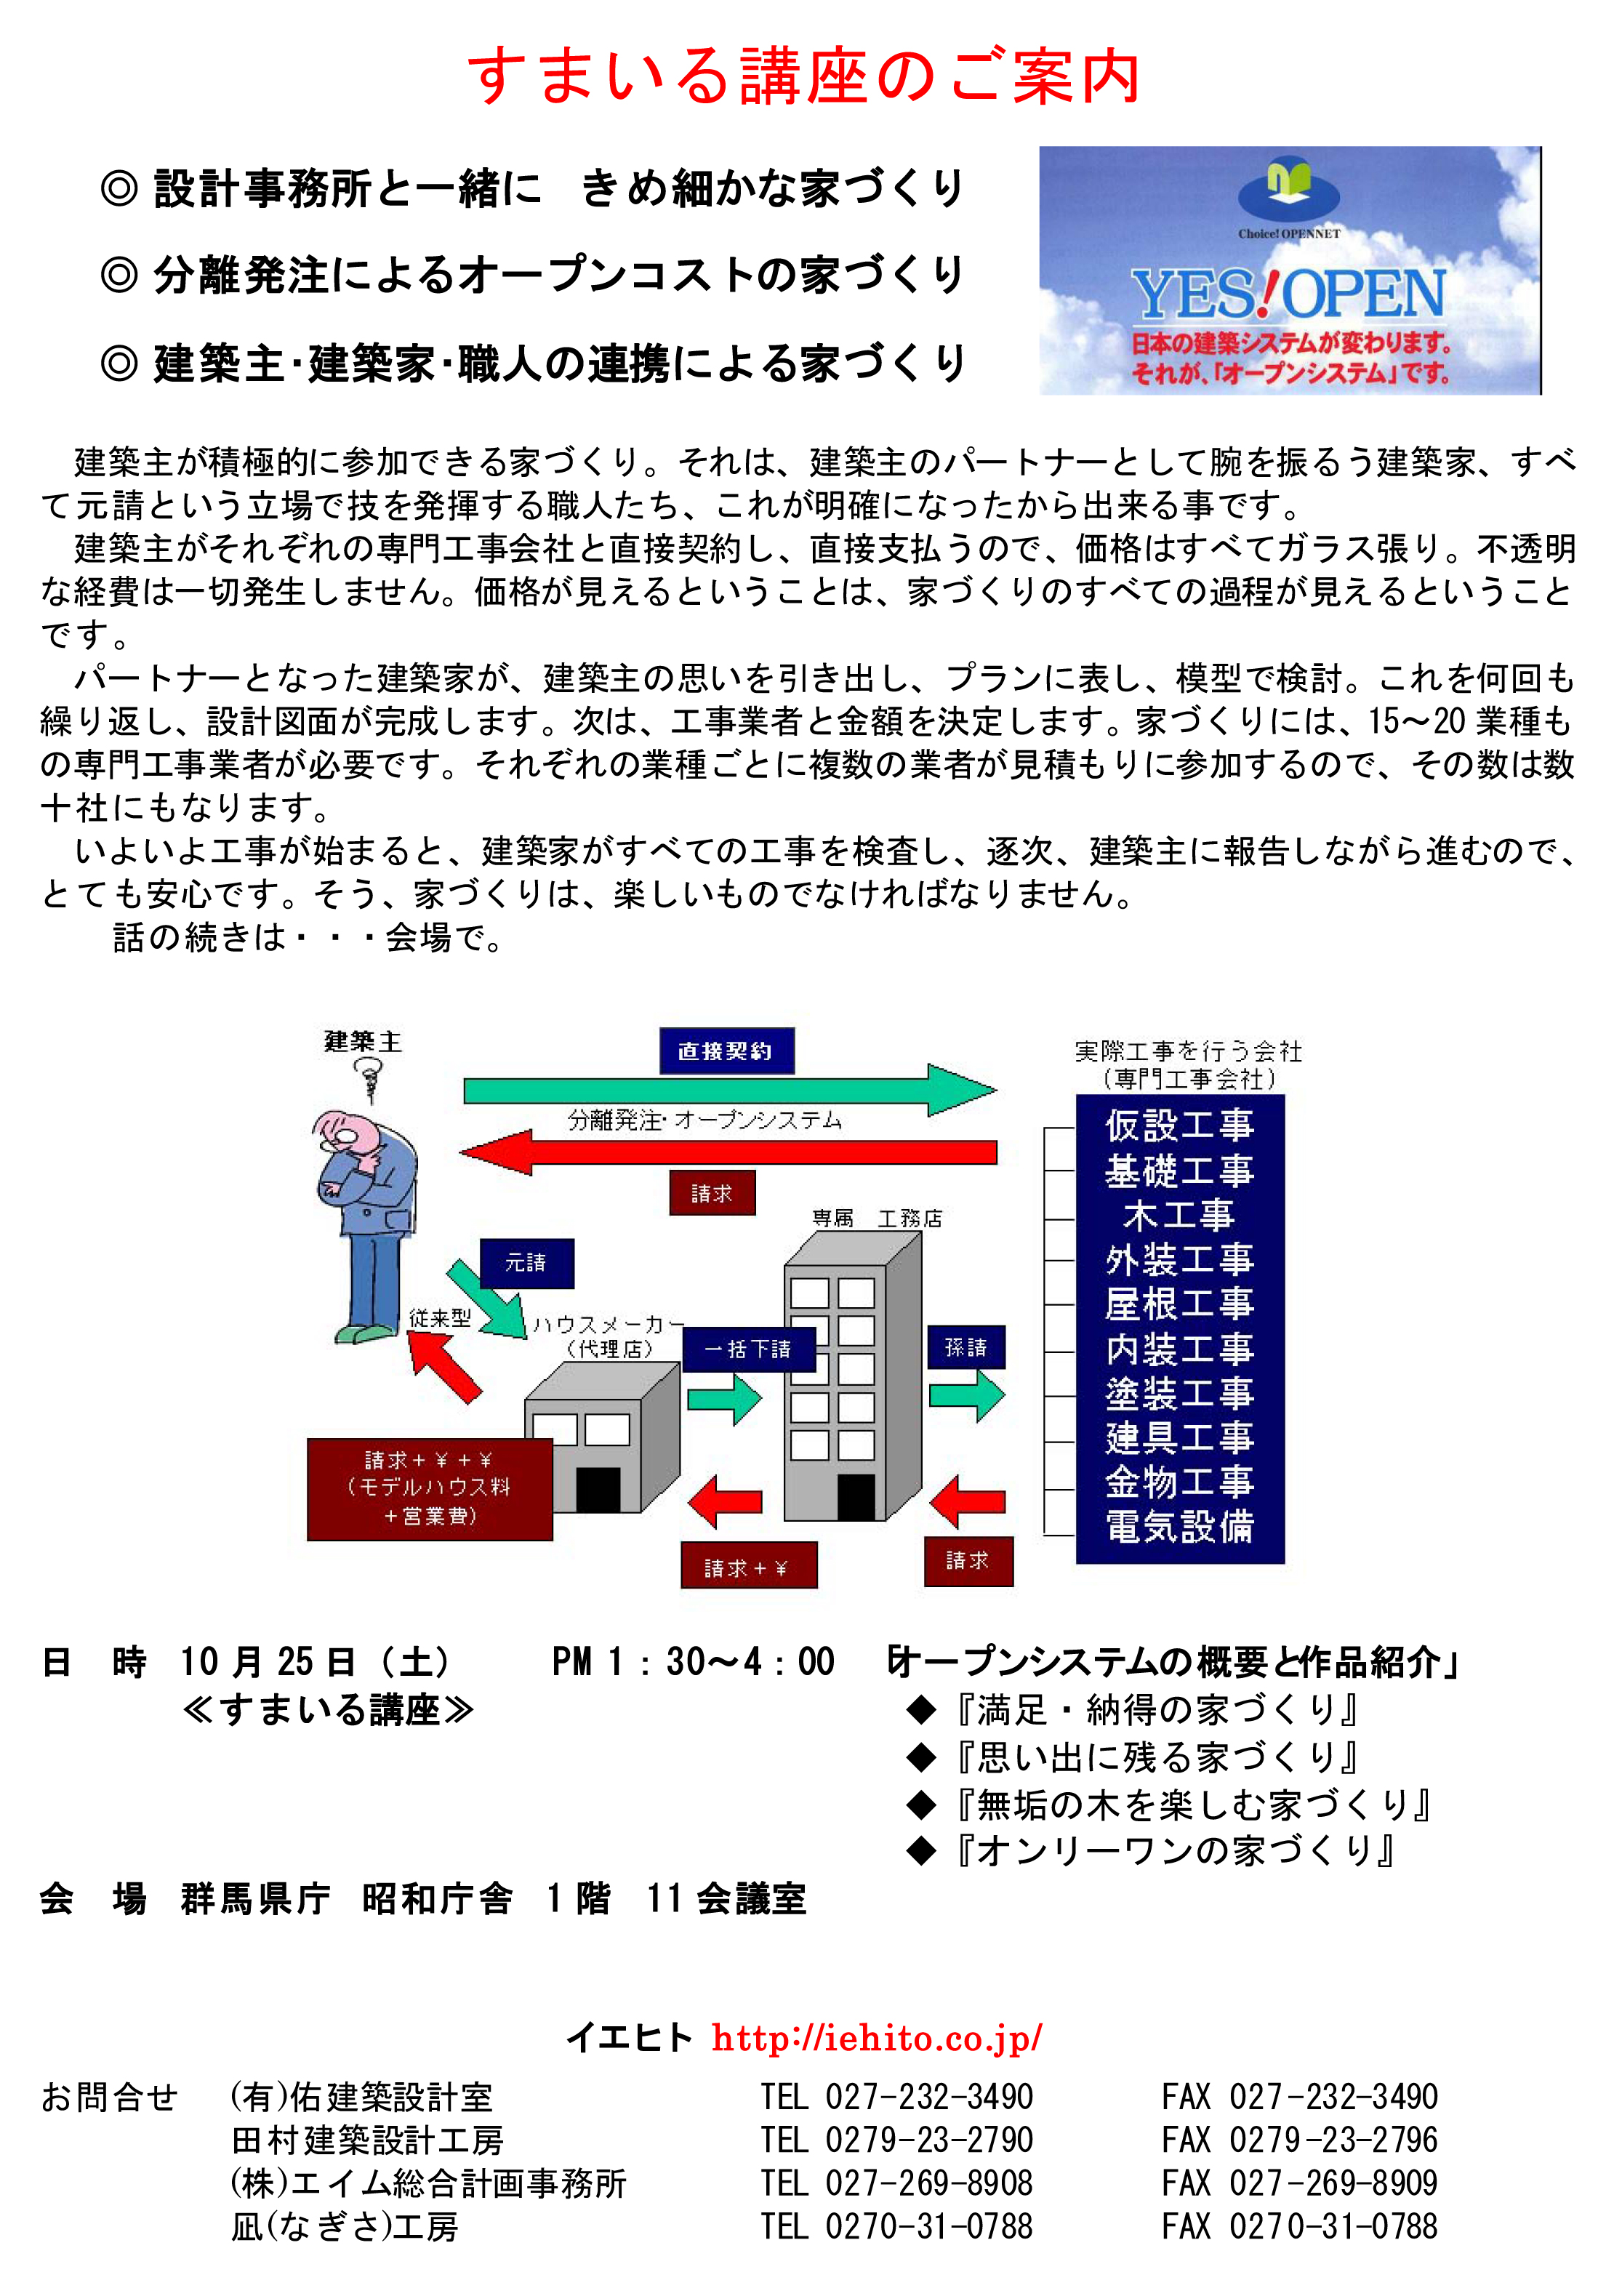 http://www.iehito.co.jp/information/images/%E3%83%91%E3%83%B3%E3%83%95%201401025.jpg